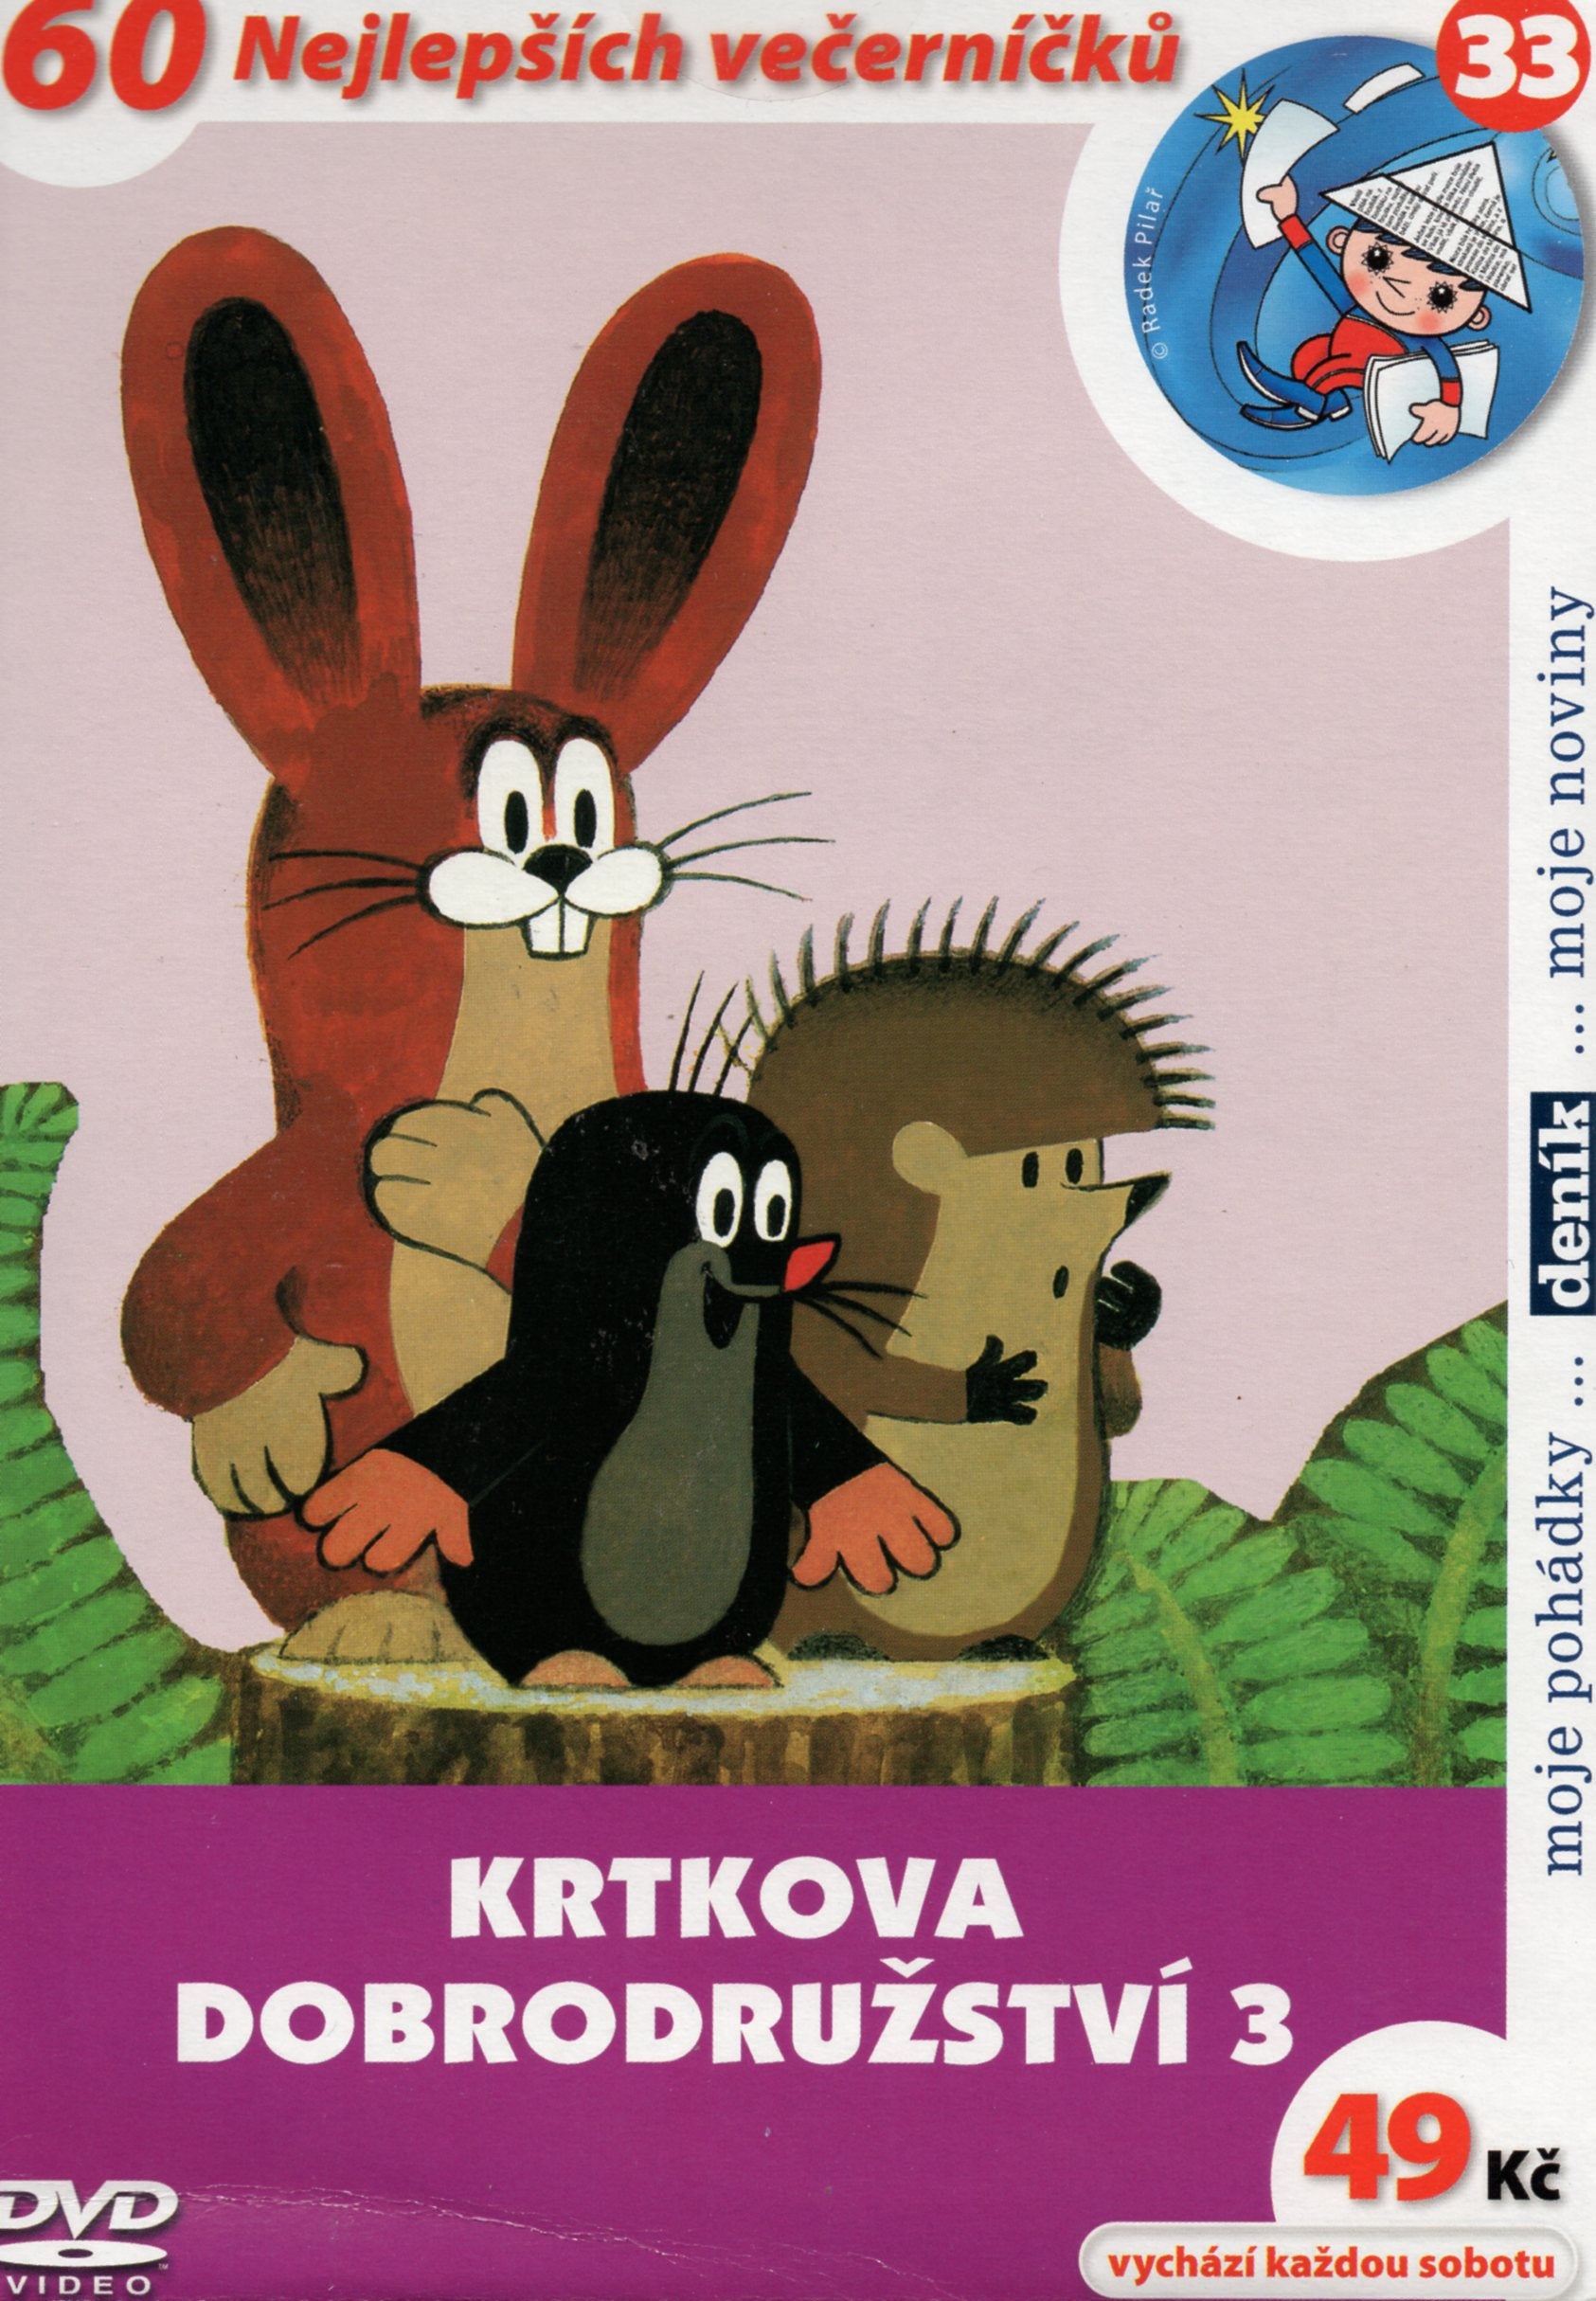 Little Mole adventures / Krtkova dobrodruzstvi 3 DVD